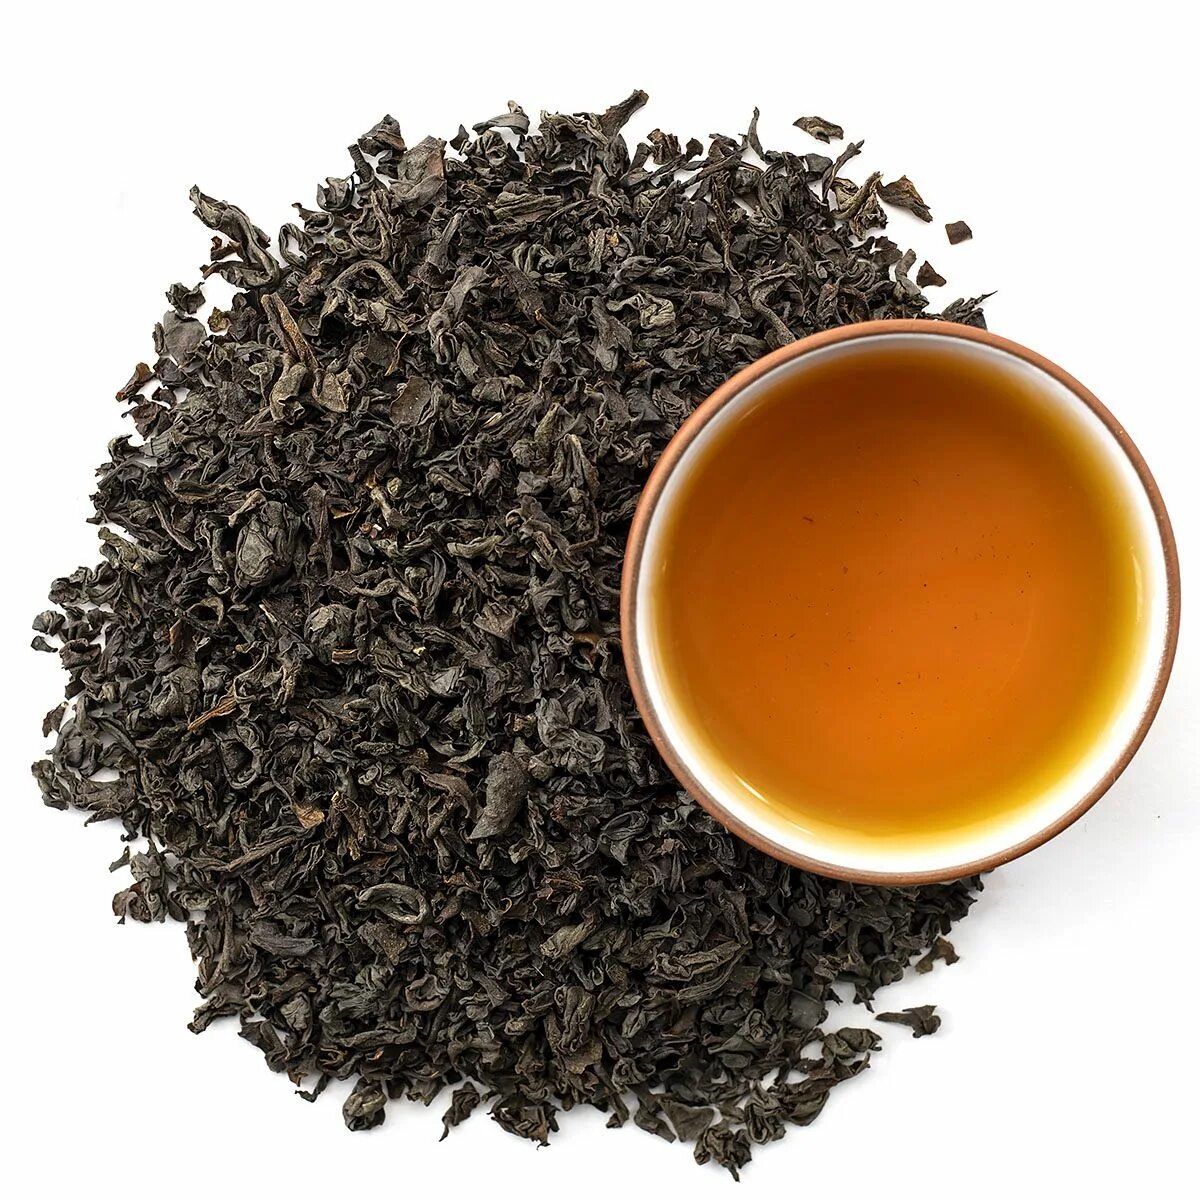 Купить чай пеко. Чай Цейлон Пекое. Чай Orange Pekoe. Чай Цейлон Пекое цейлонский. Чай чёрный Цейлон аннигканде Pekoe.